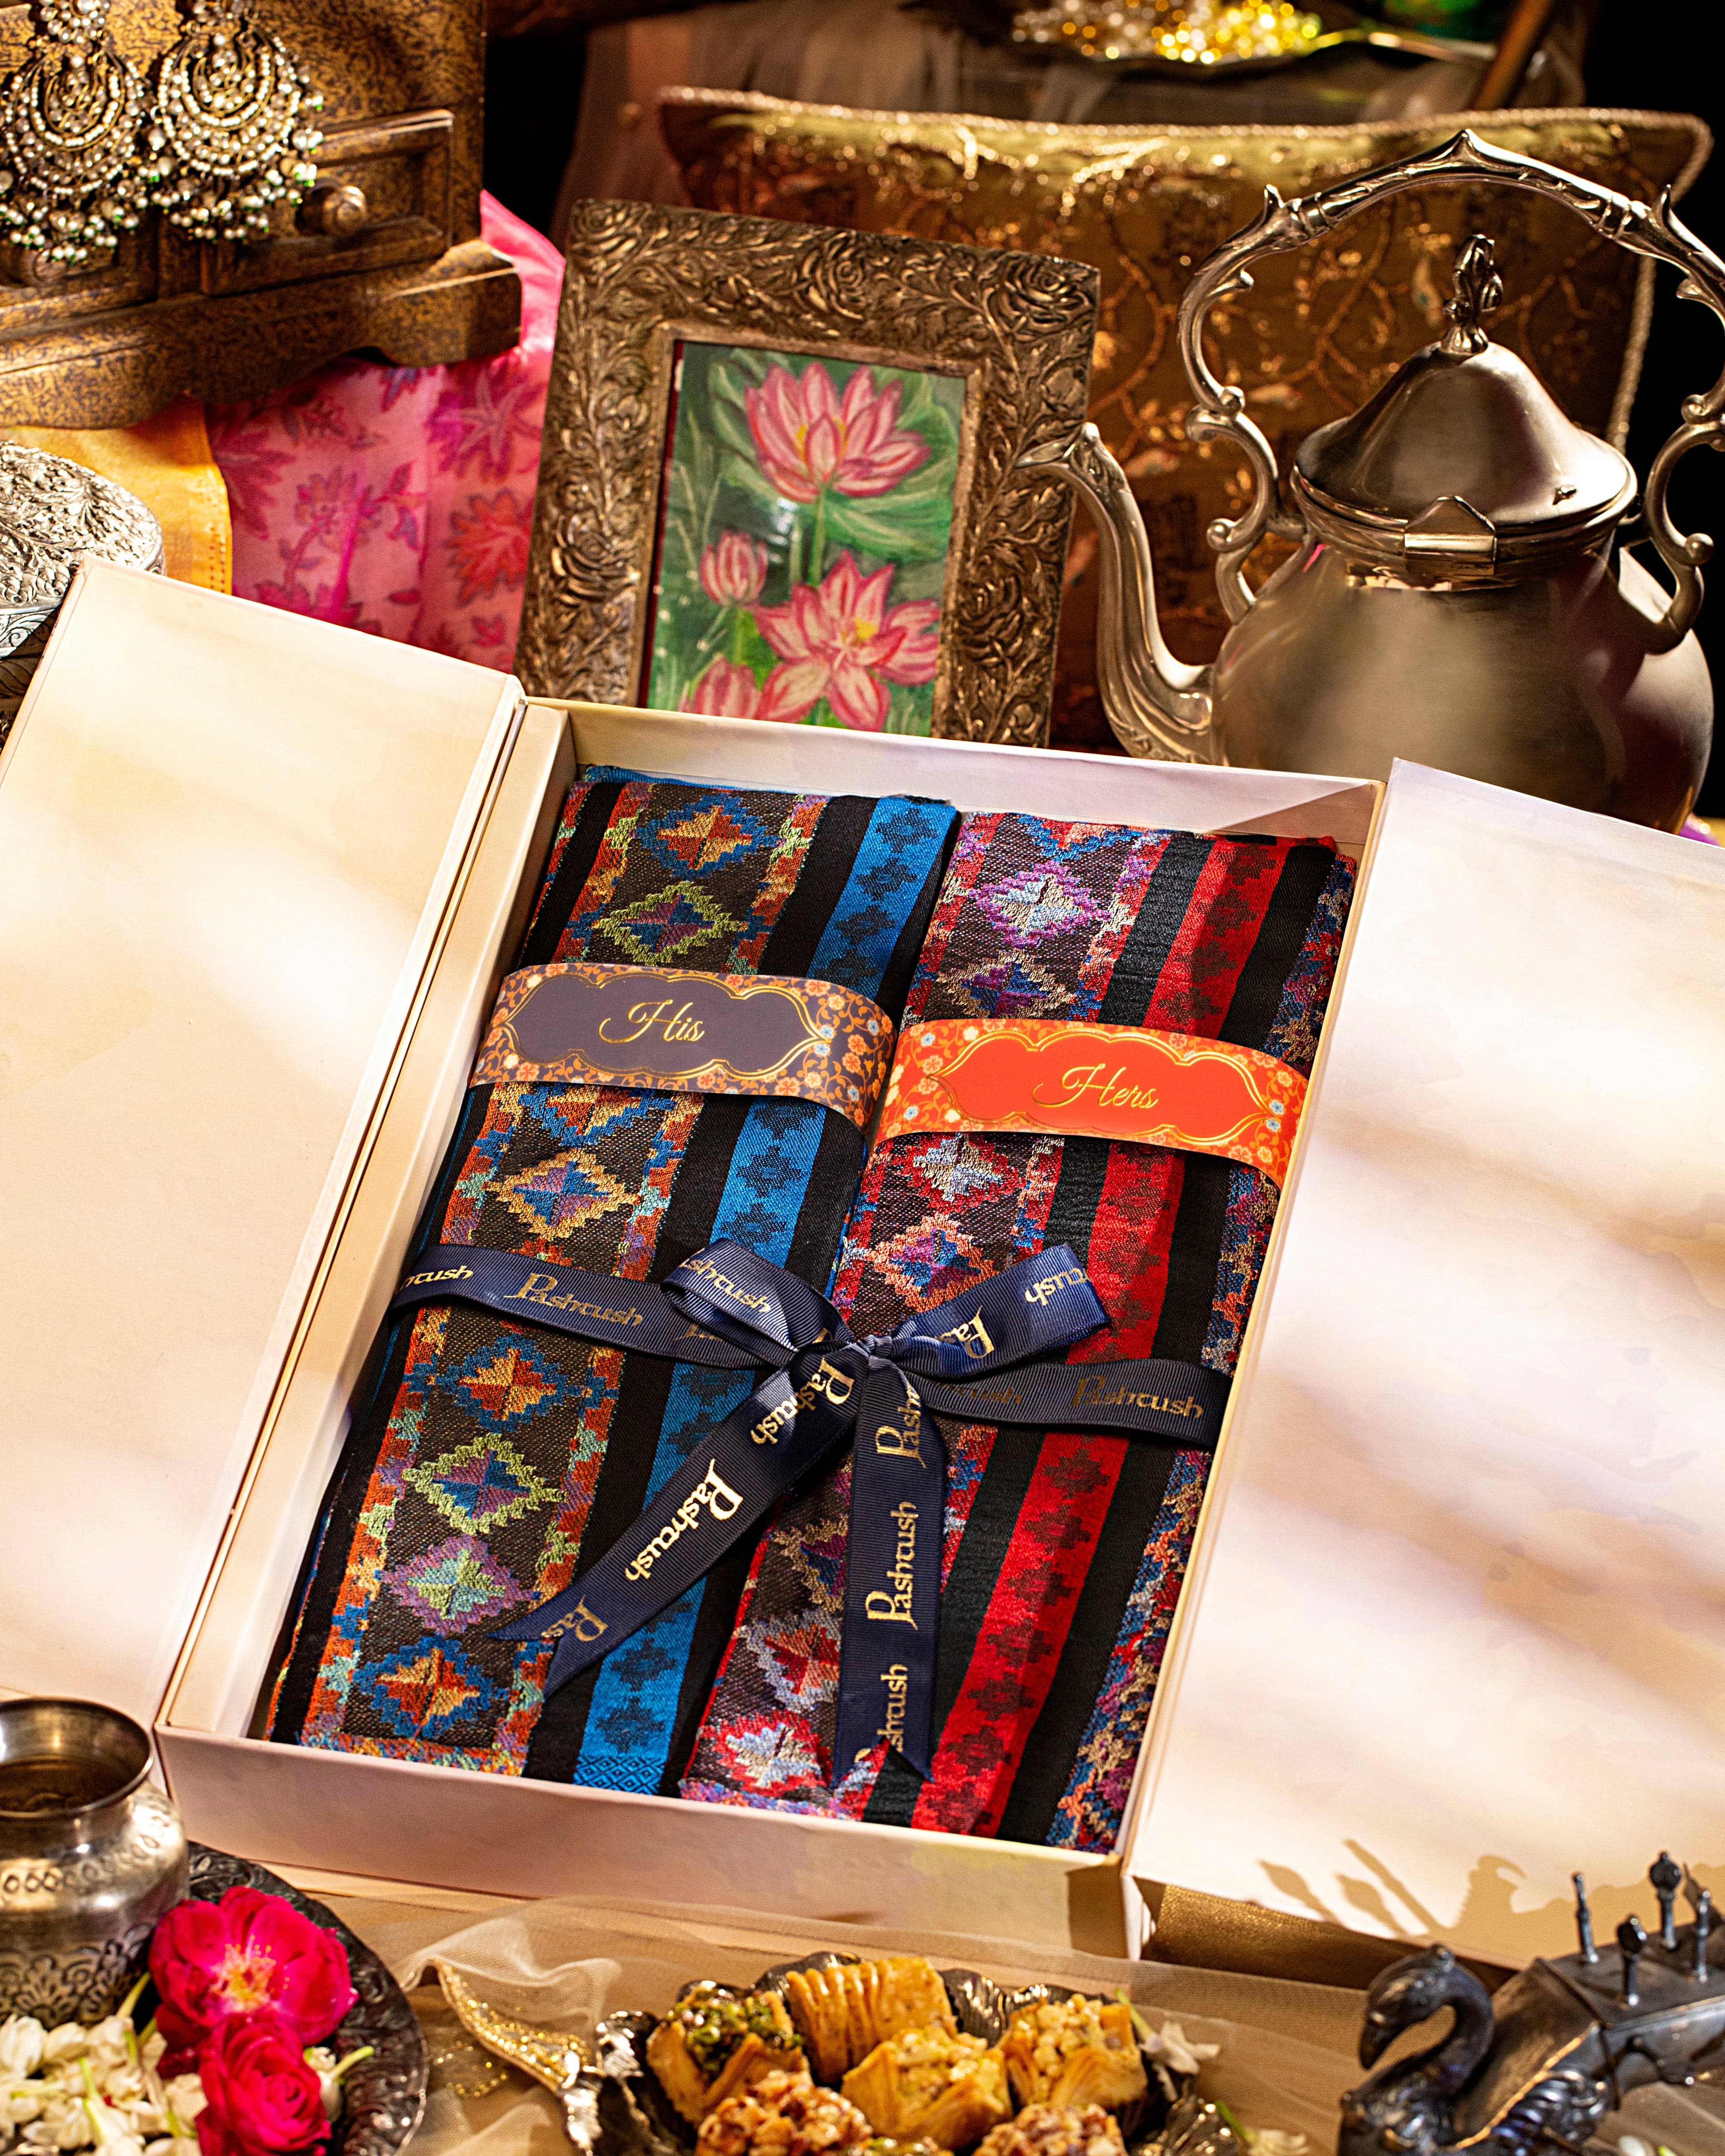 Buy Kesari Saffron Gift Box (2gm) Online in India @ Best Price